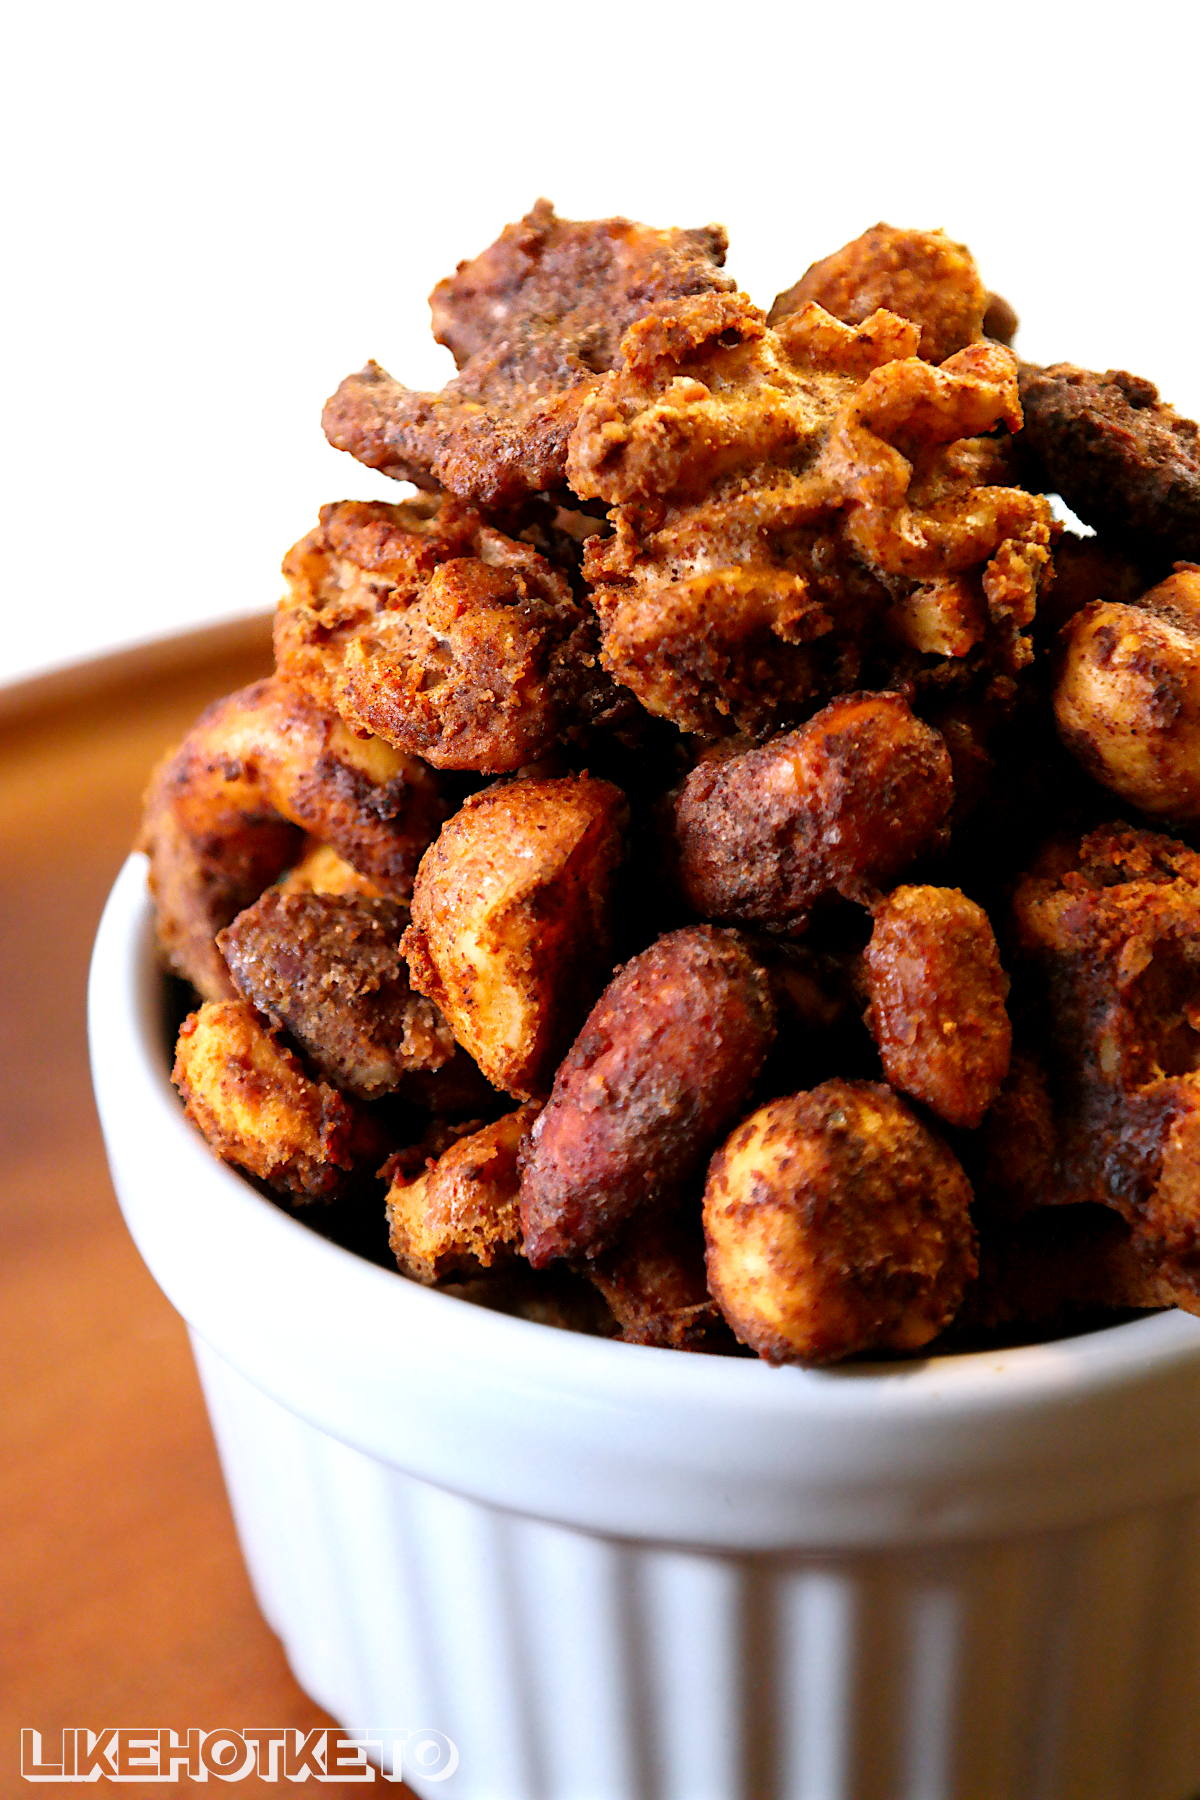 Keto cinnamon no-sugar candied nuts piled high in a white ramekin.